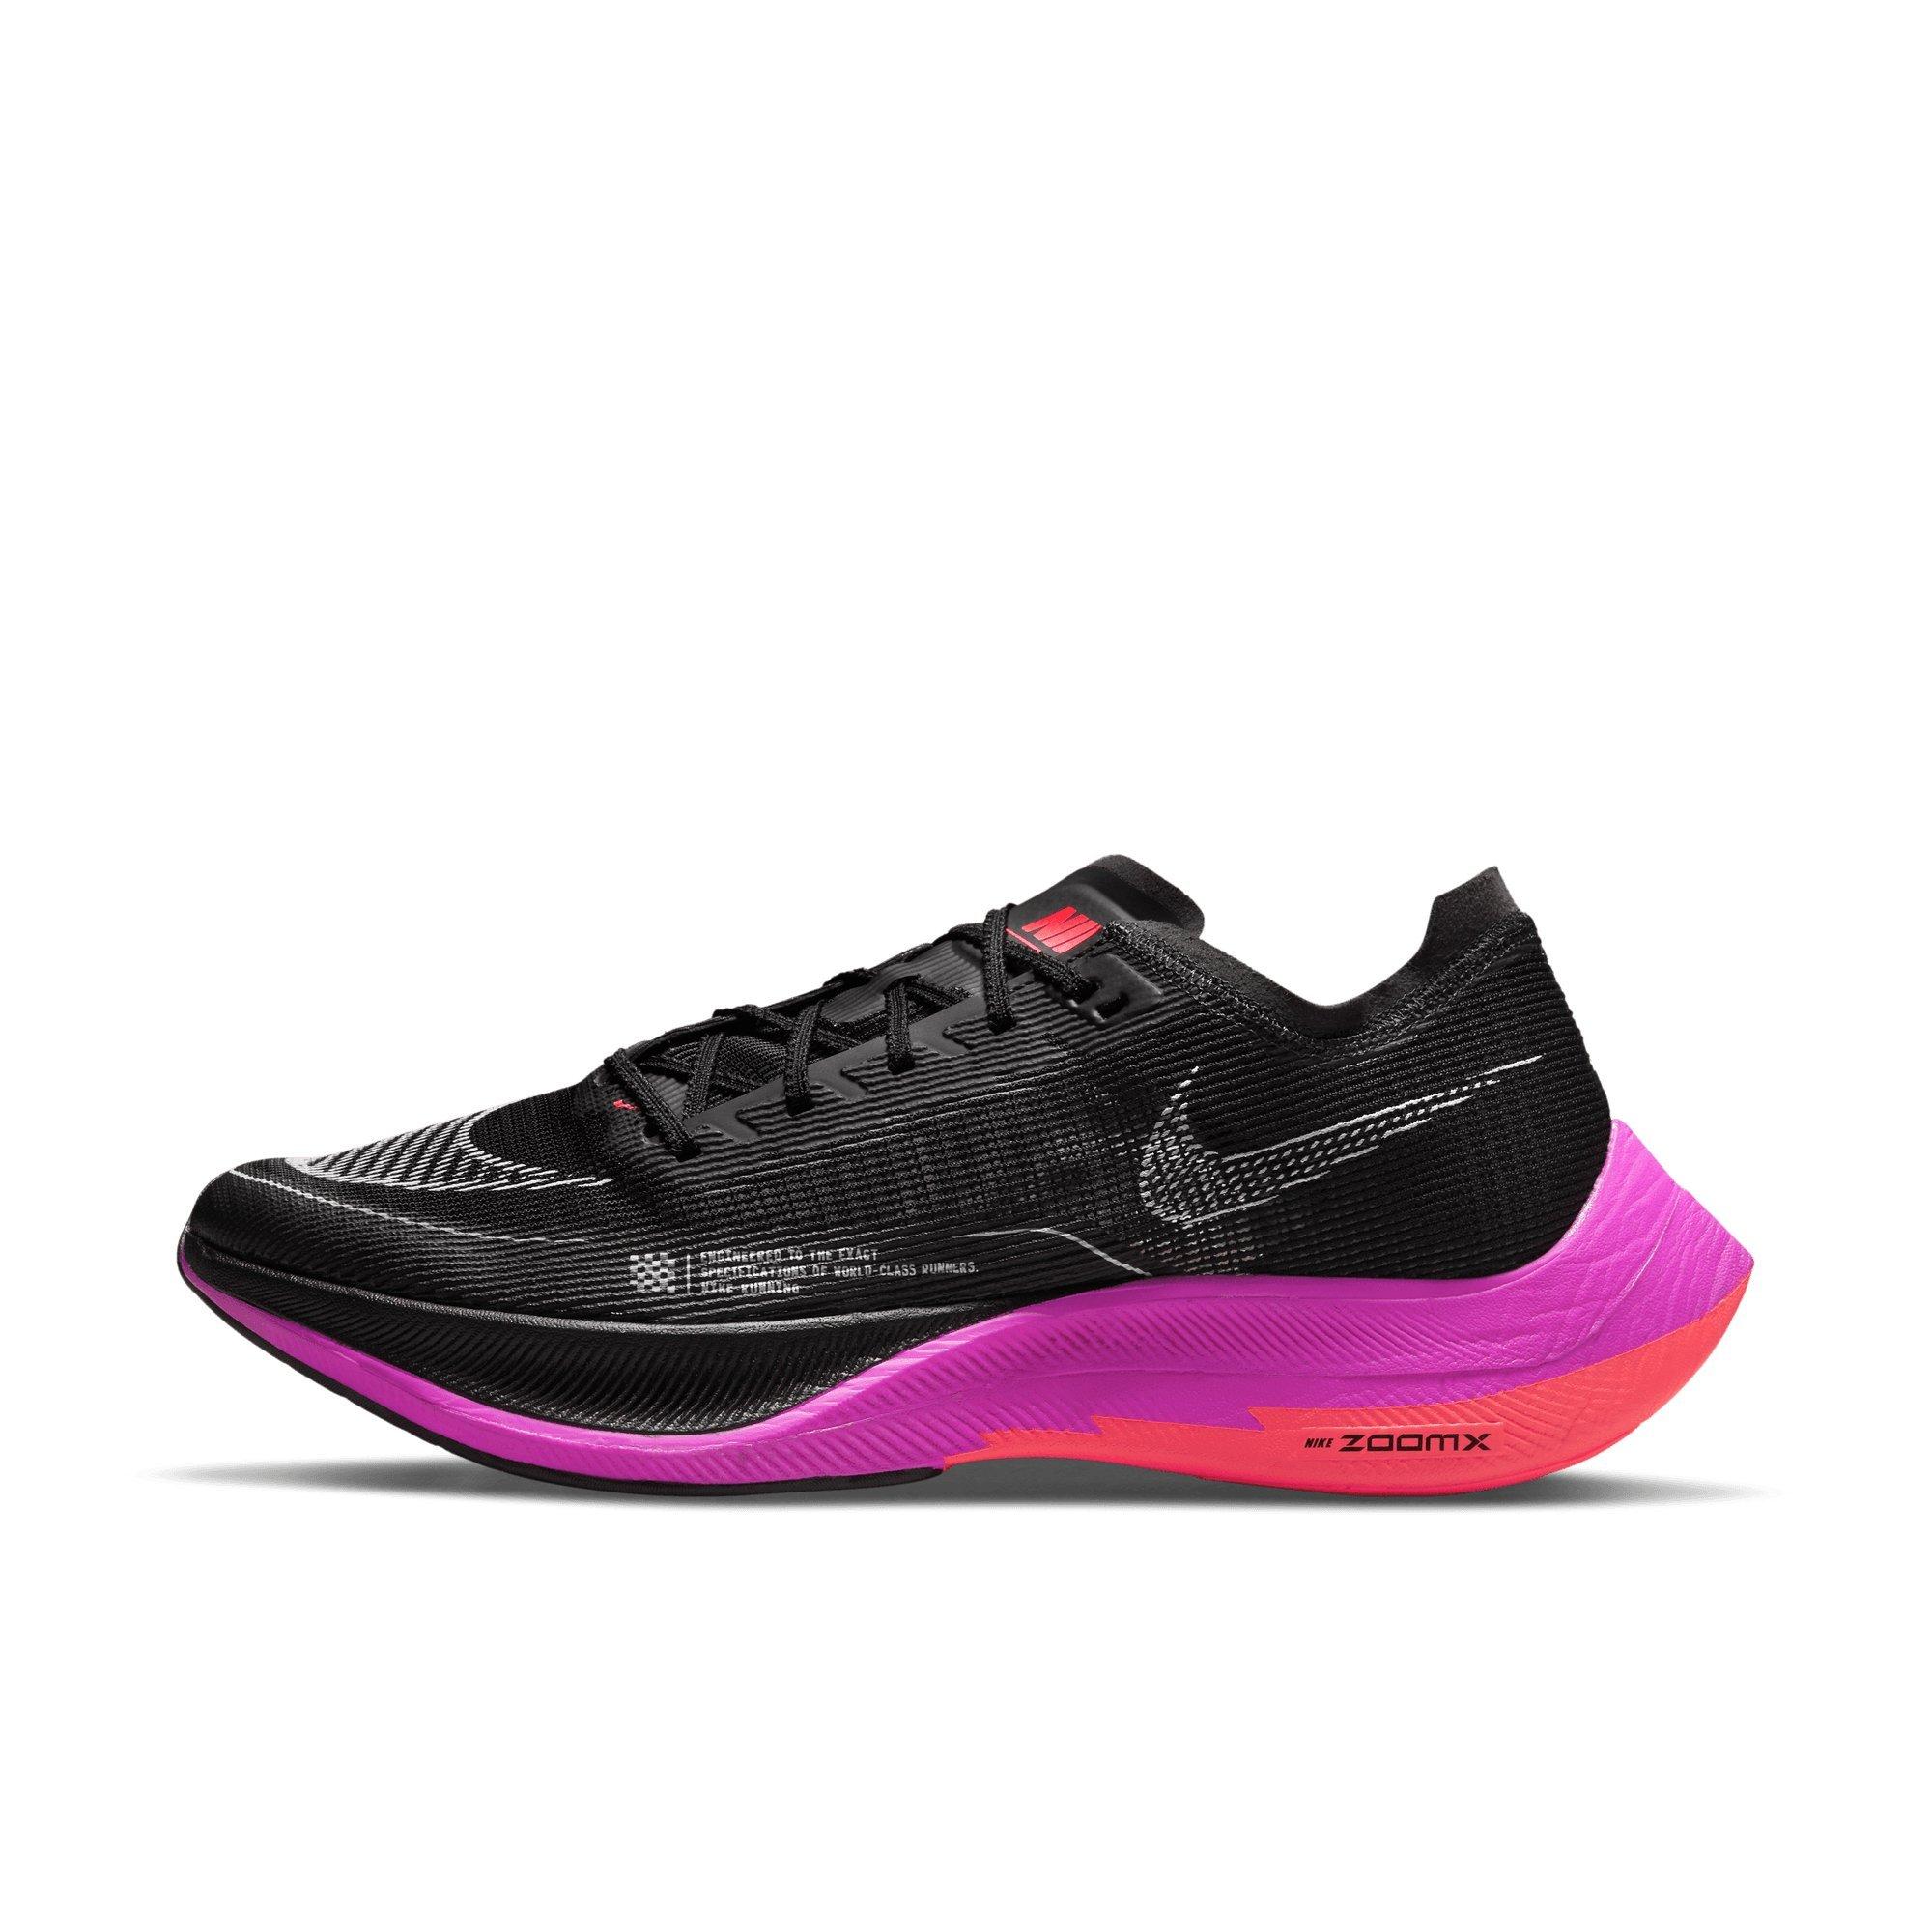 Nike ZoomX Vaporfly Next% 2 Men's Running Shoe